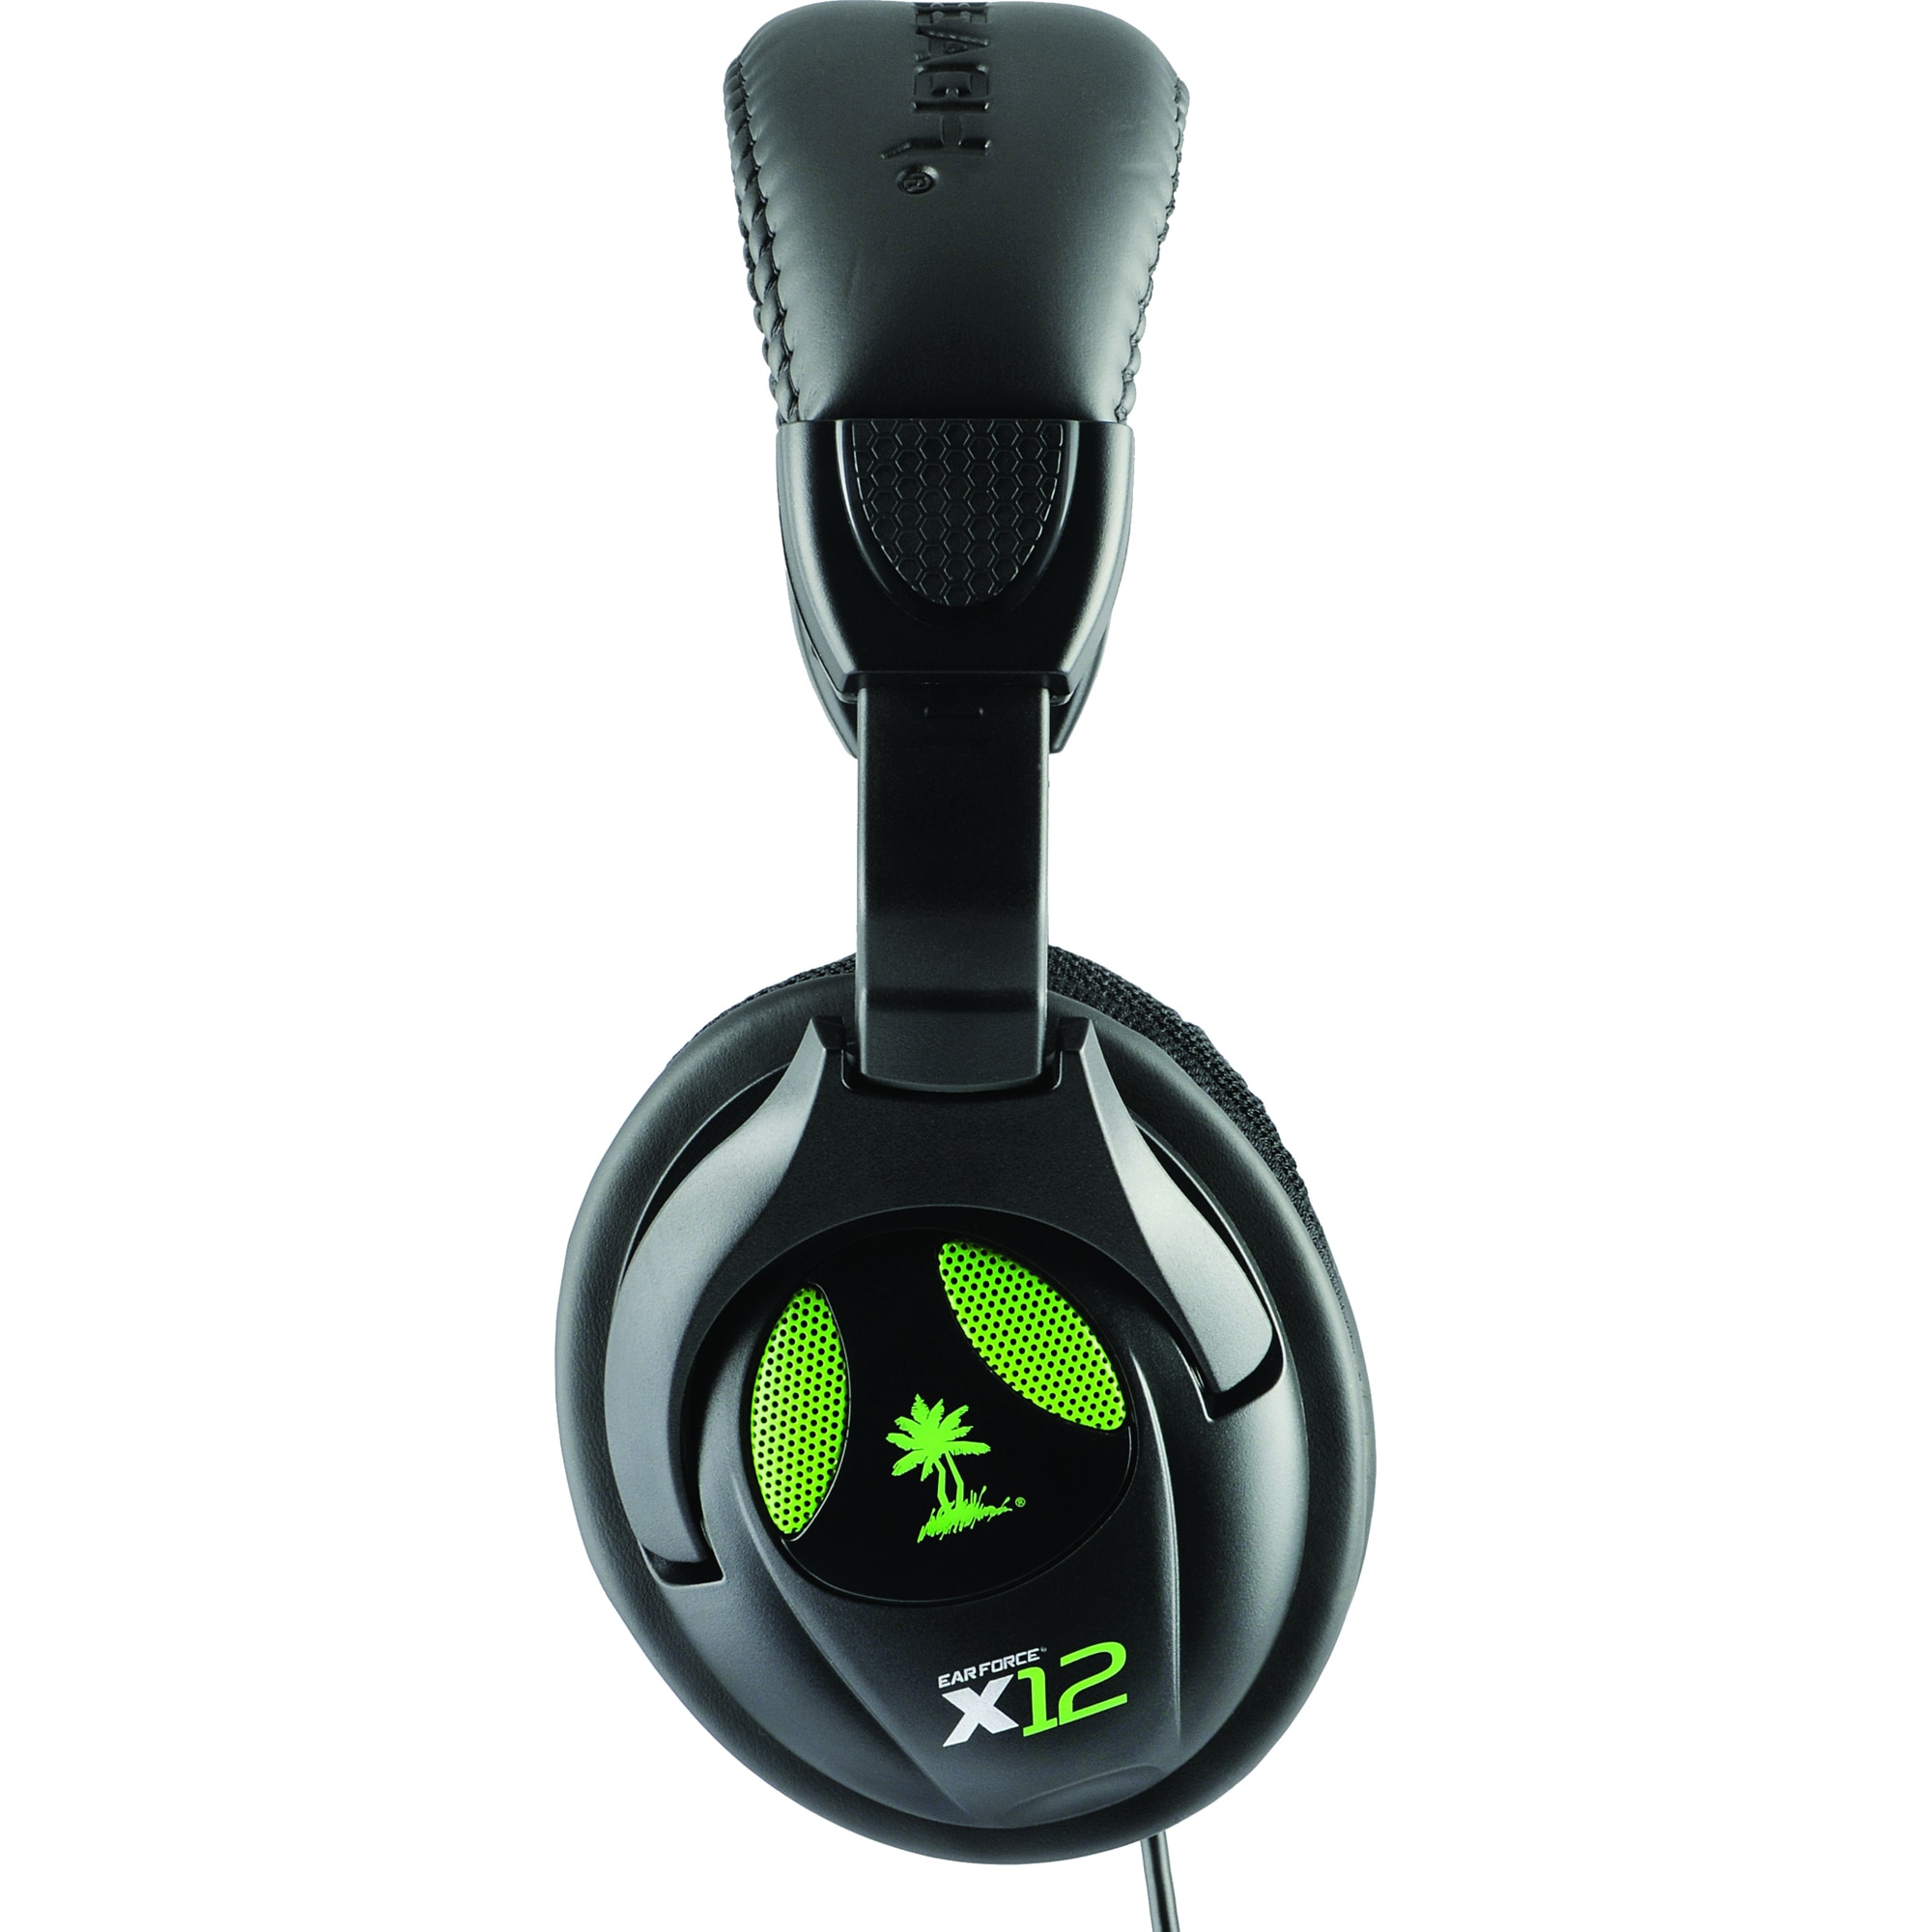 Casti Turtle Beach Ear Force X12 Pentru Xbox 360 Pc Emag Ro